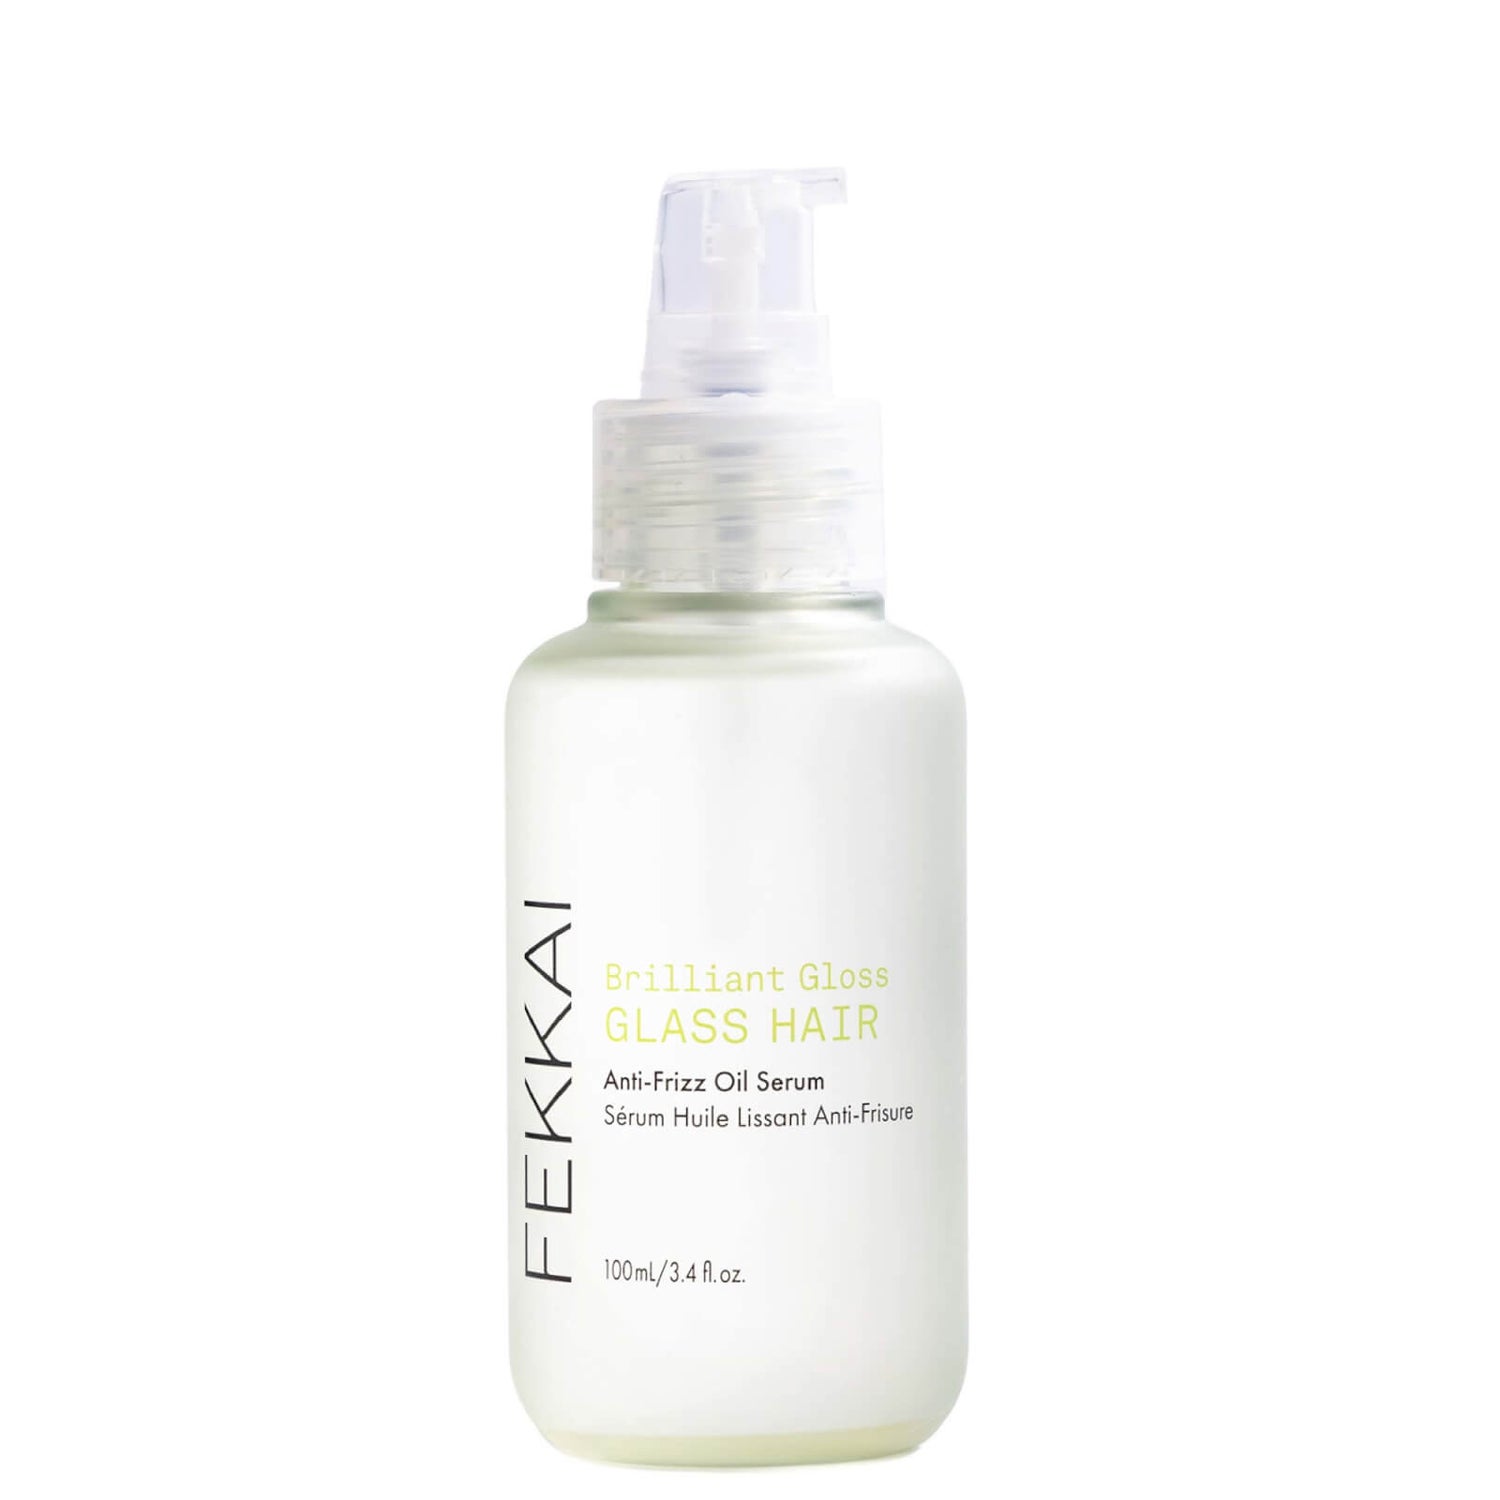 Fekkai Brilliant Gloss Glass Hair Anti-frizz Serum 100ml - Dermstore